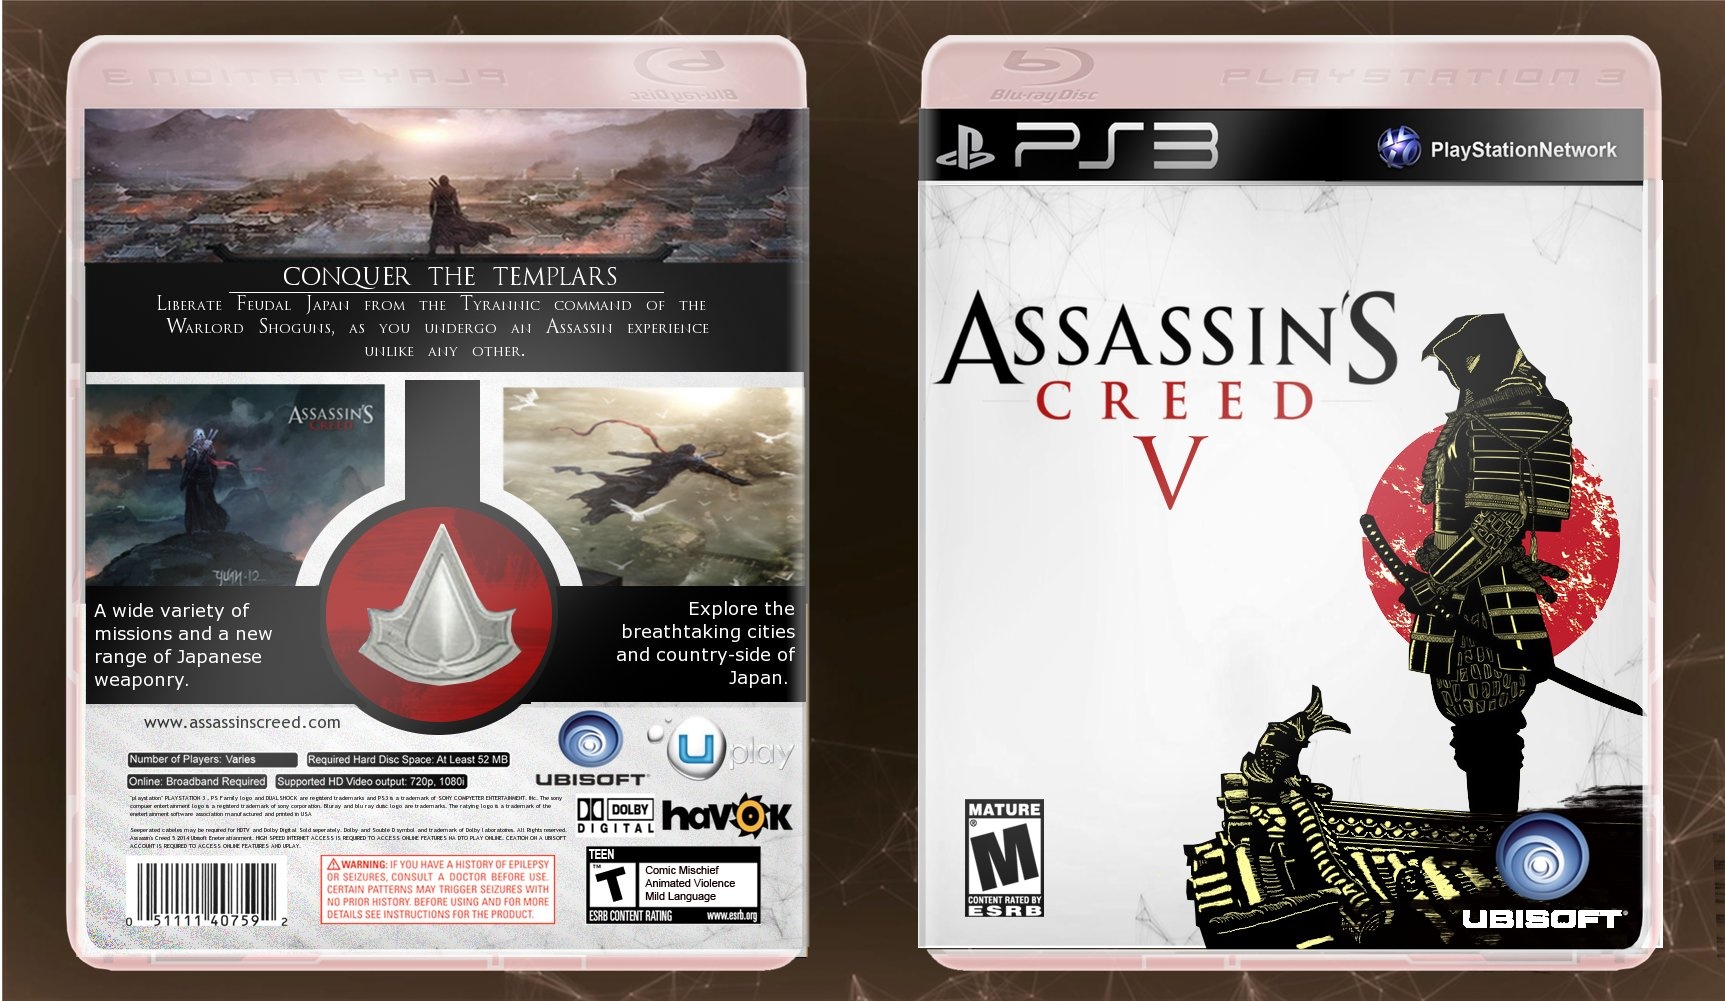 Assassin's Creed V box cover